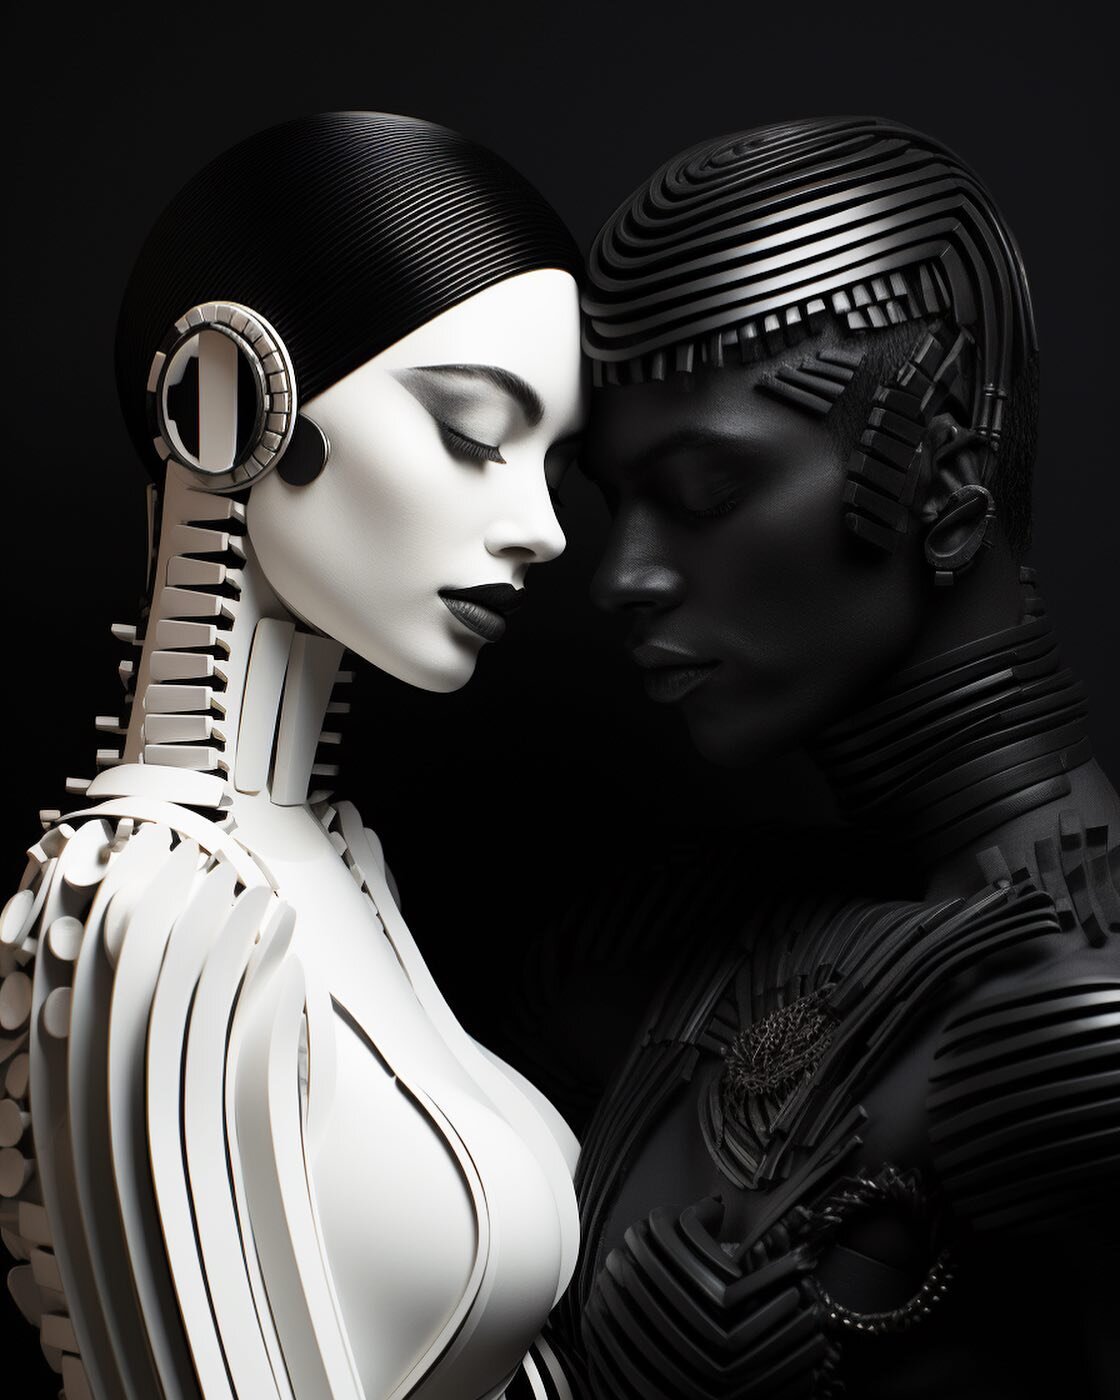 Love at first sight
.
.
.
#genaigirl #scifiart #sciencefictionart #futuristicart
#mechart #dystopianart
#robotics #bionics #love #exmachina #utopiaart #technoart #robots #uncannyvalley
#futurismart #surreal
#proceduralart #scifiworld
#scifilover #sci